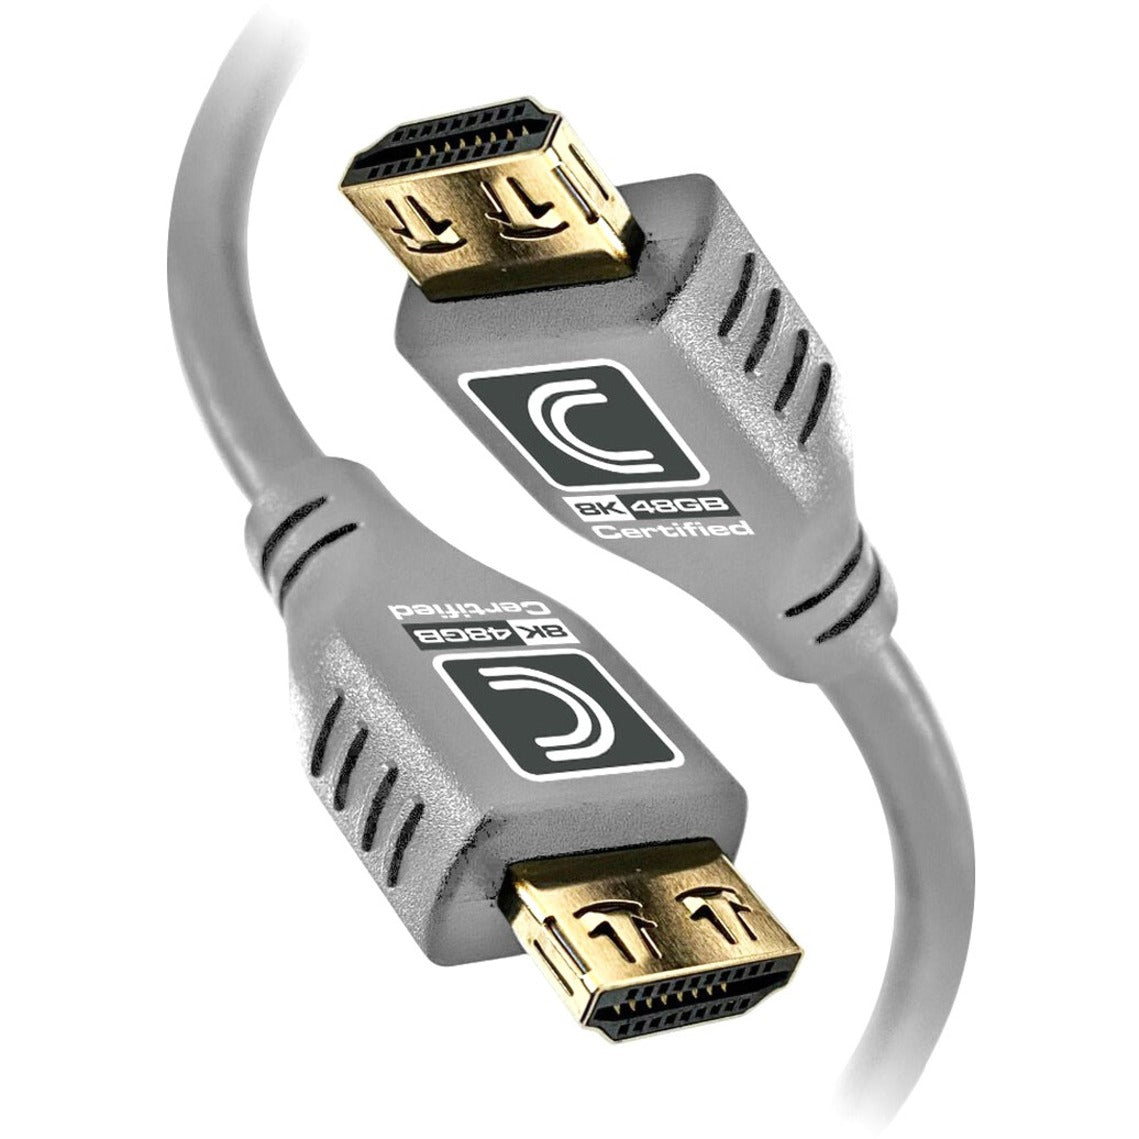 Comprehensive MHD48G-6PROGRY MicroFlex Pro AV/IT HDMI A/V Cable, 6 ft, 48 Gbit/s, Gray, Lifetime Warranty